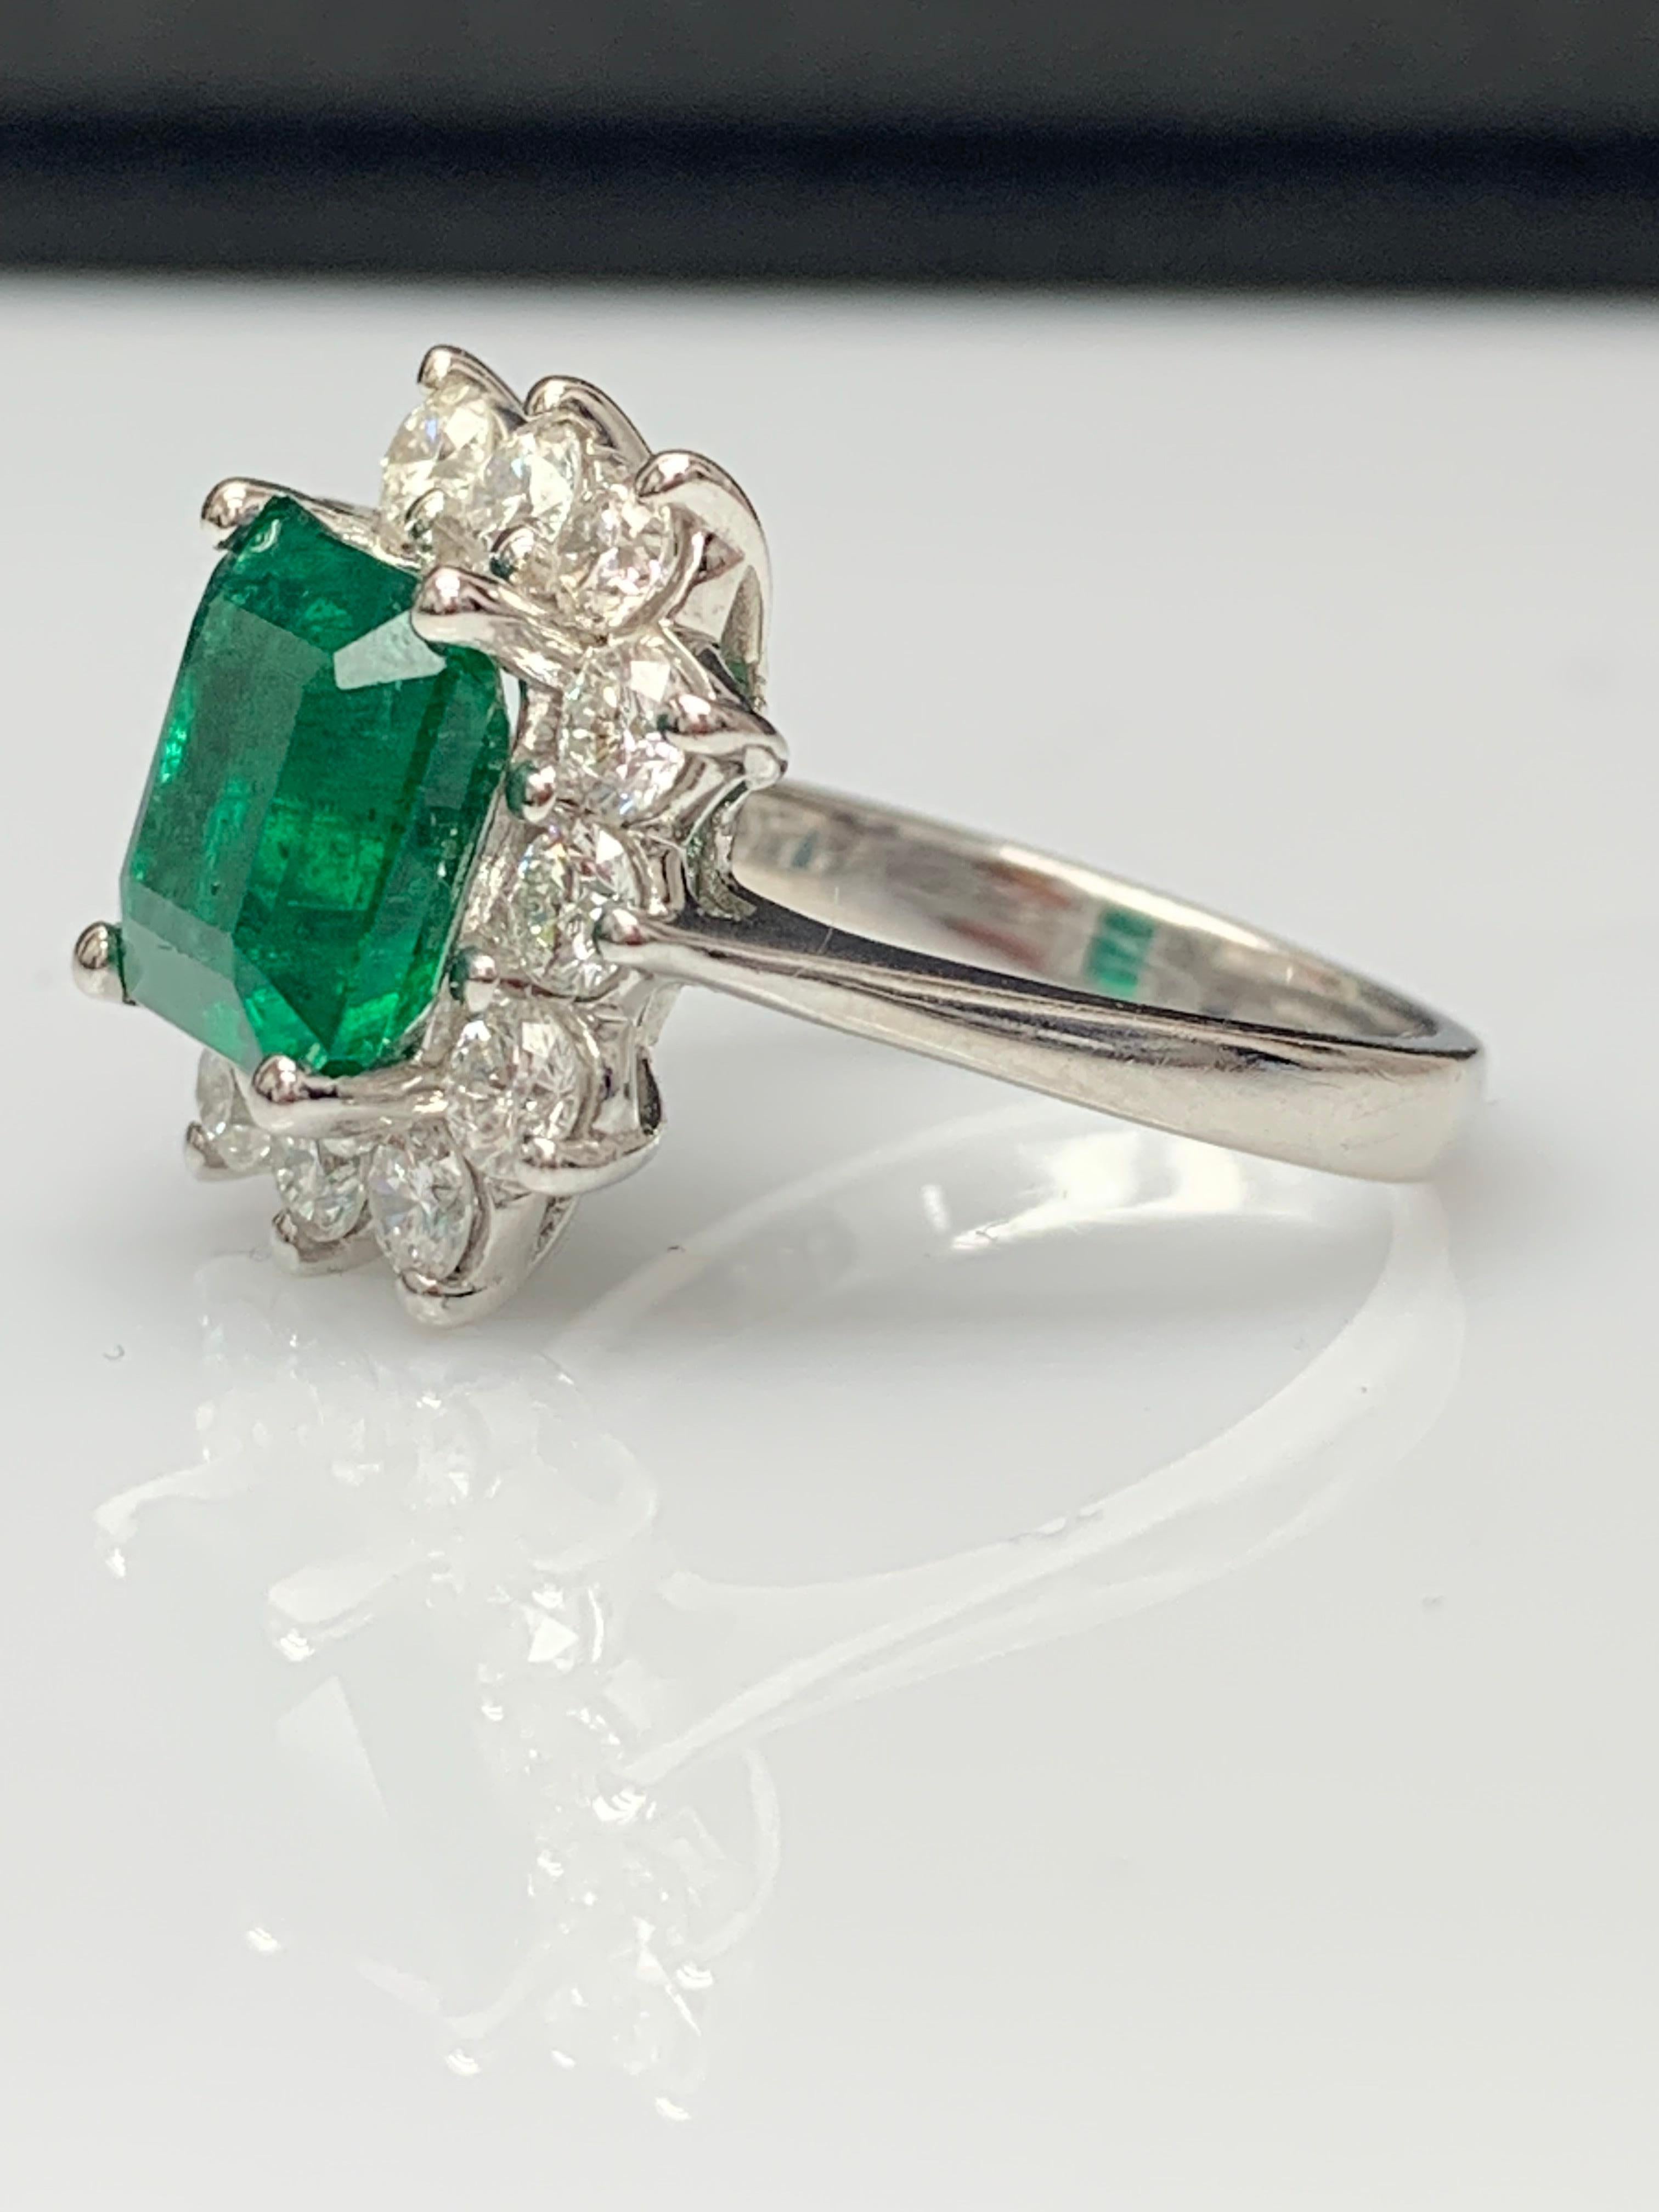 Women's Certified 3.17 Carat Emerald Cut Emerald Diamond Ring in 14K White Gold For Sale